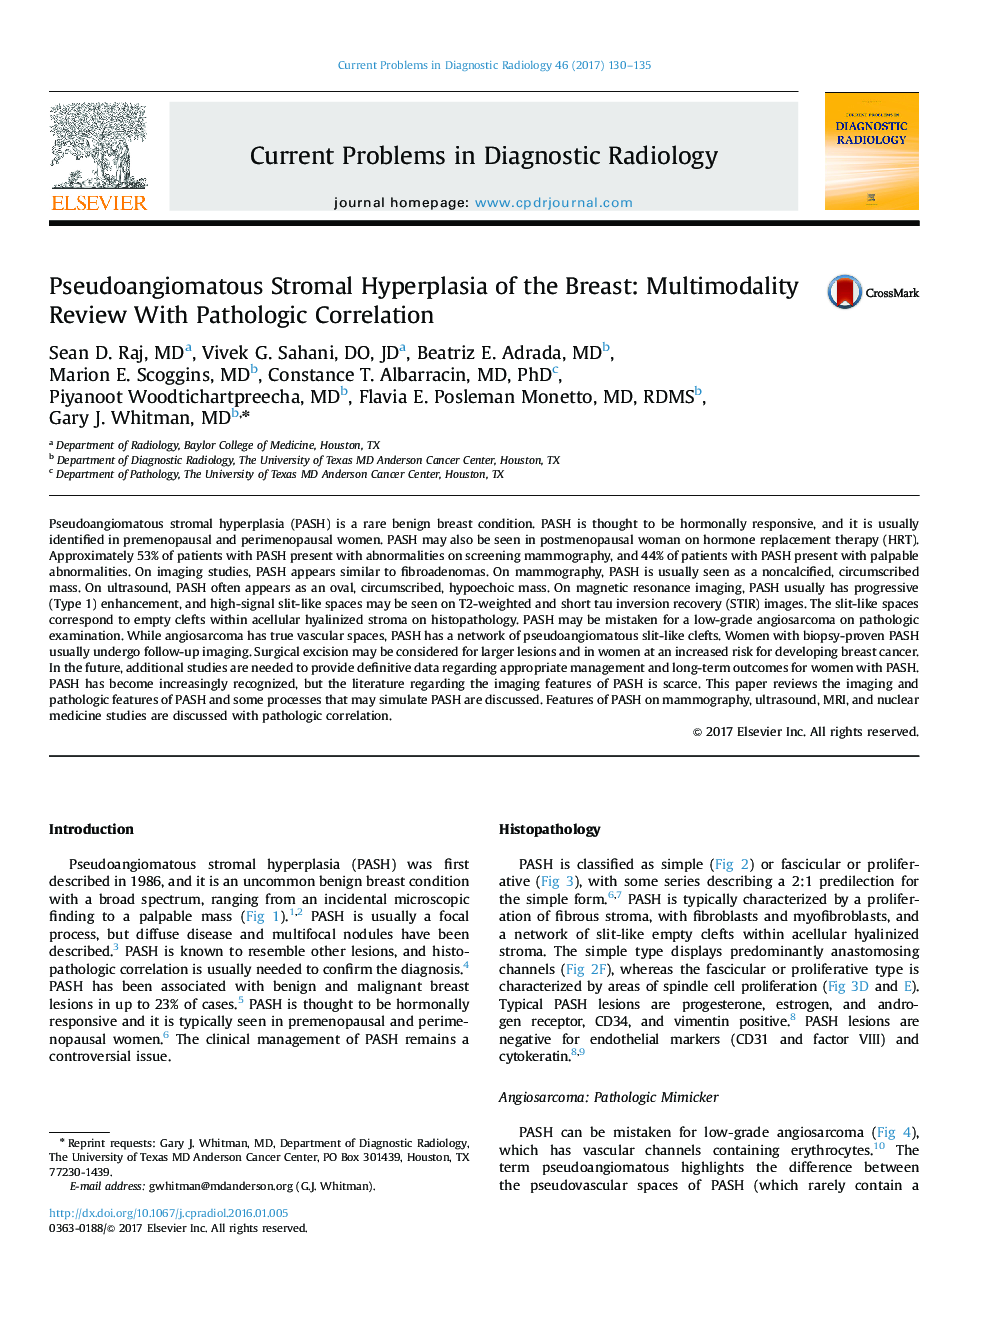 Pseudoangiomatous Stromal Hyperplasia of the Breast: Multimodality Review With Pathologic Correlation